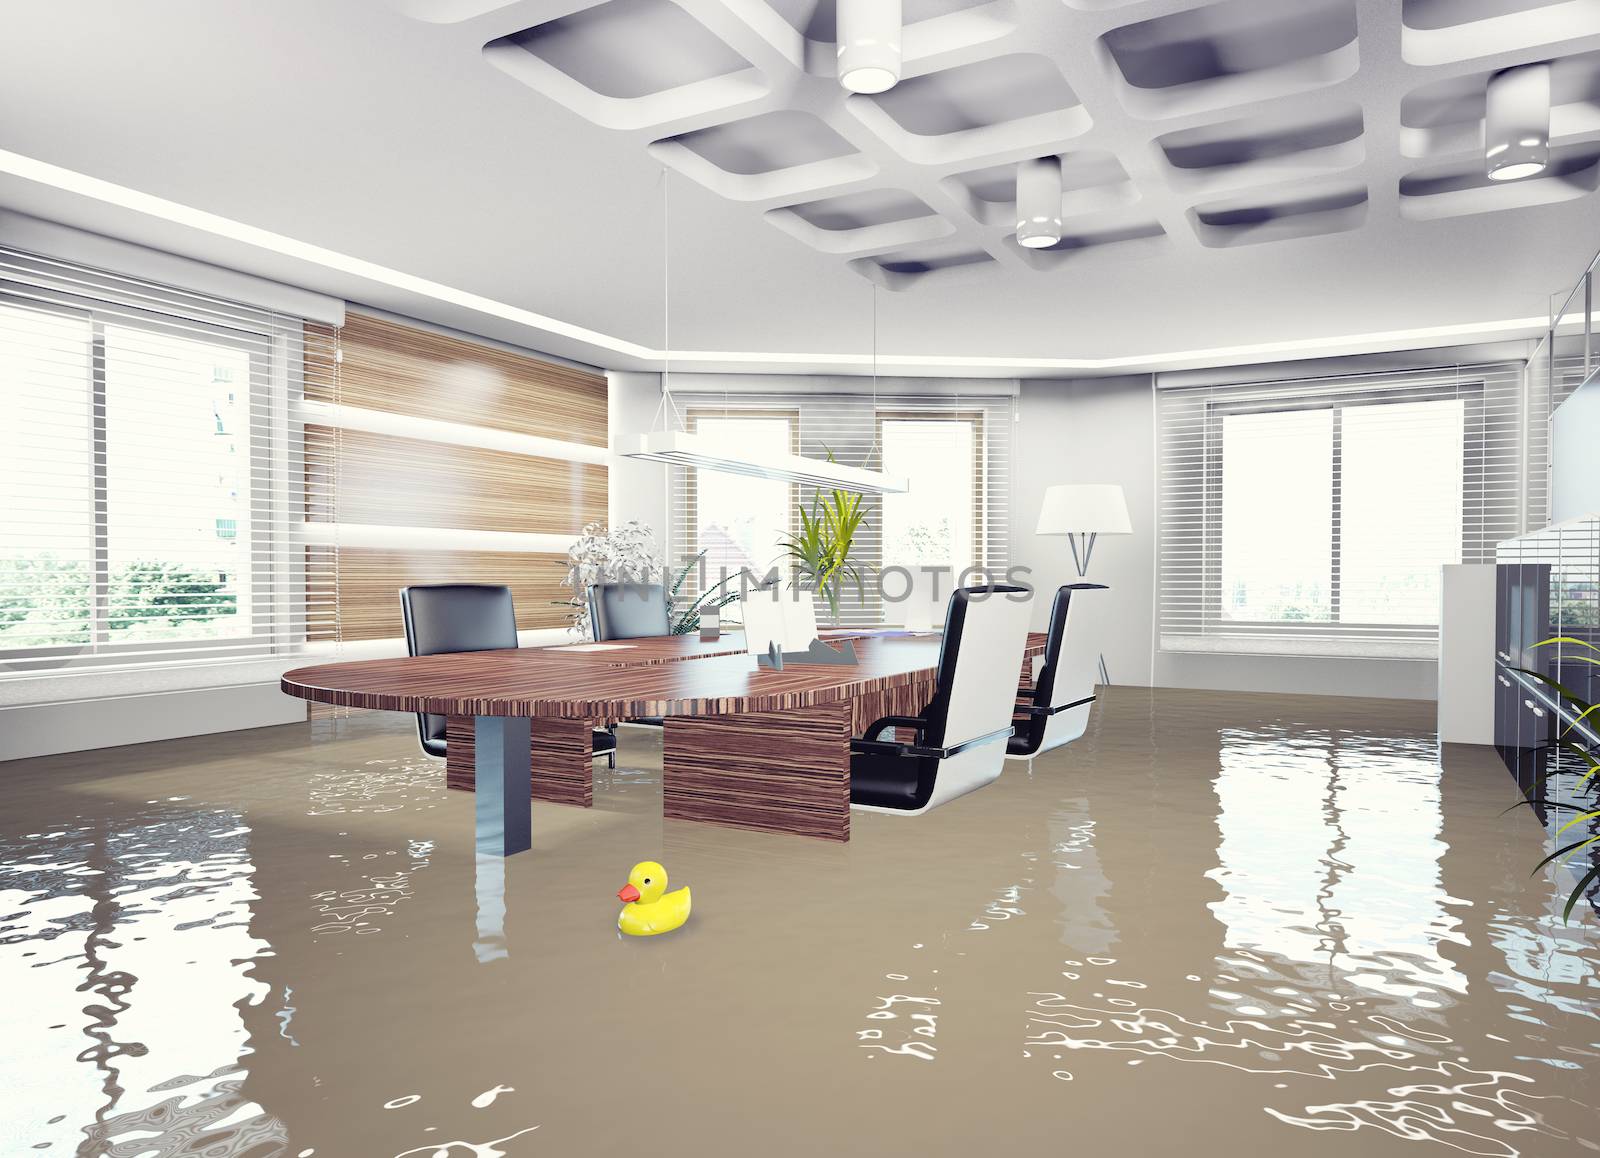 flooding office interior. 3d concept